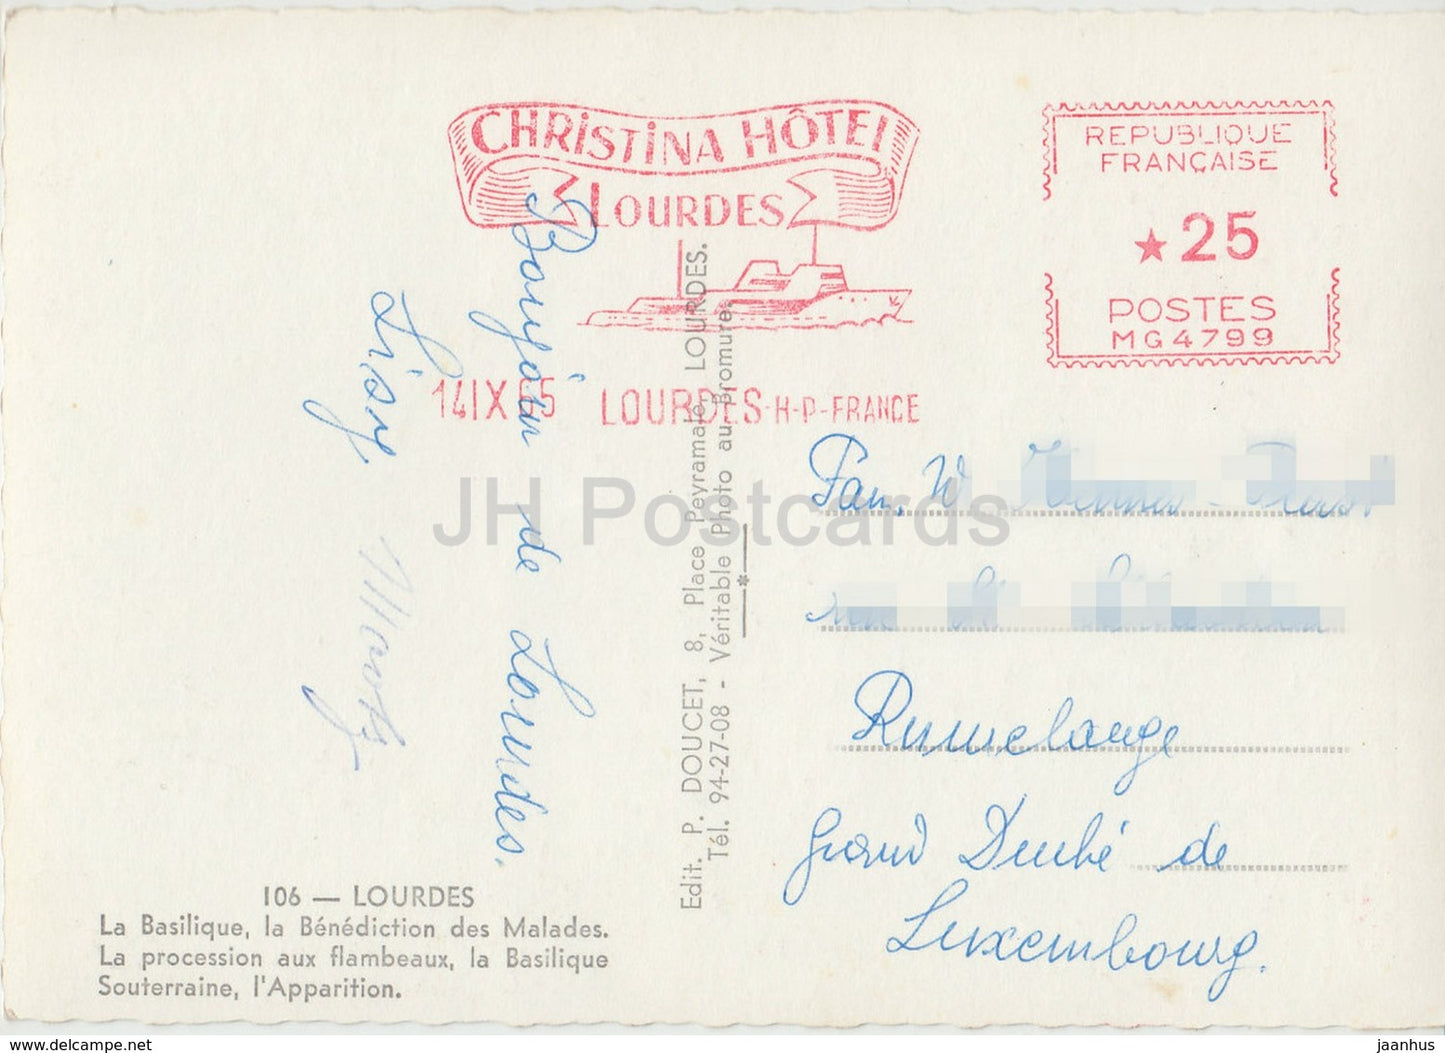 Souvenir de Lourdes – Hotel Christina – Multiview – 106 – Frankreich – 1965 – gebraucht